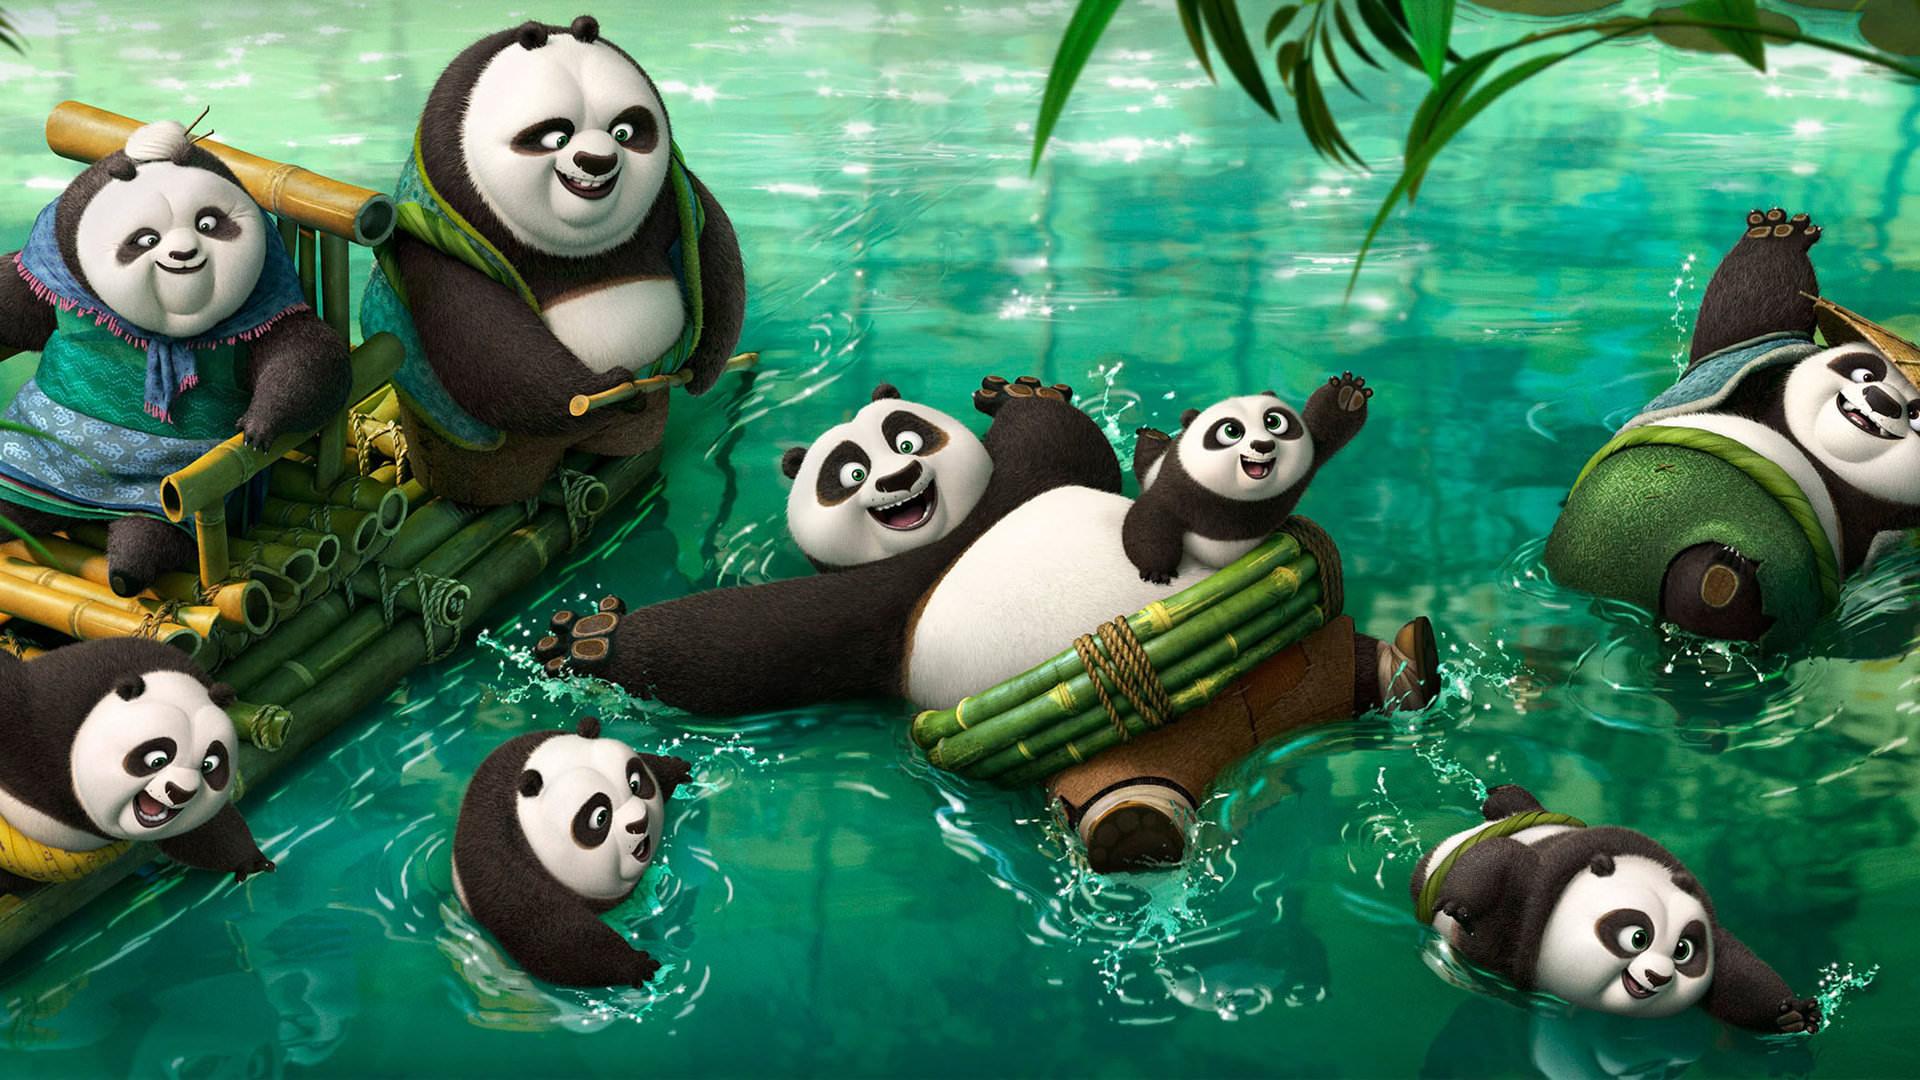 Kung Fu Panda wallpaper 1920x1080 Full HD (1080p) desktop background